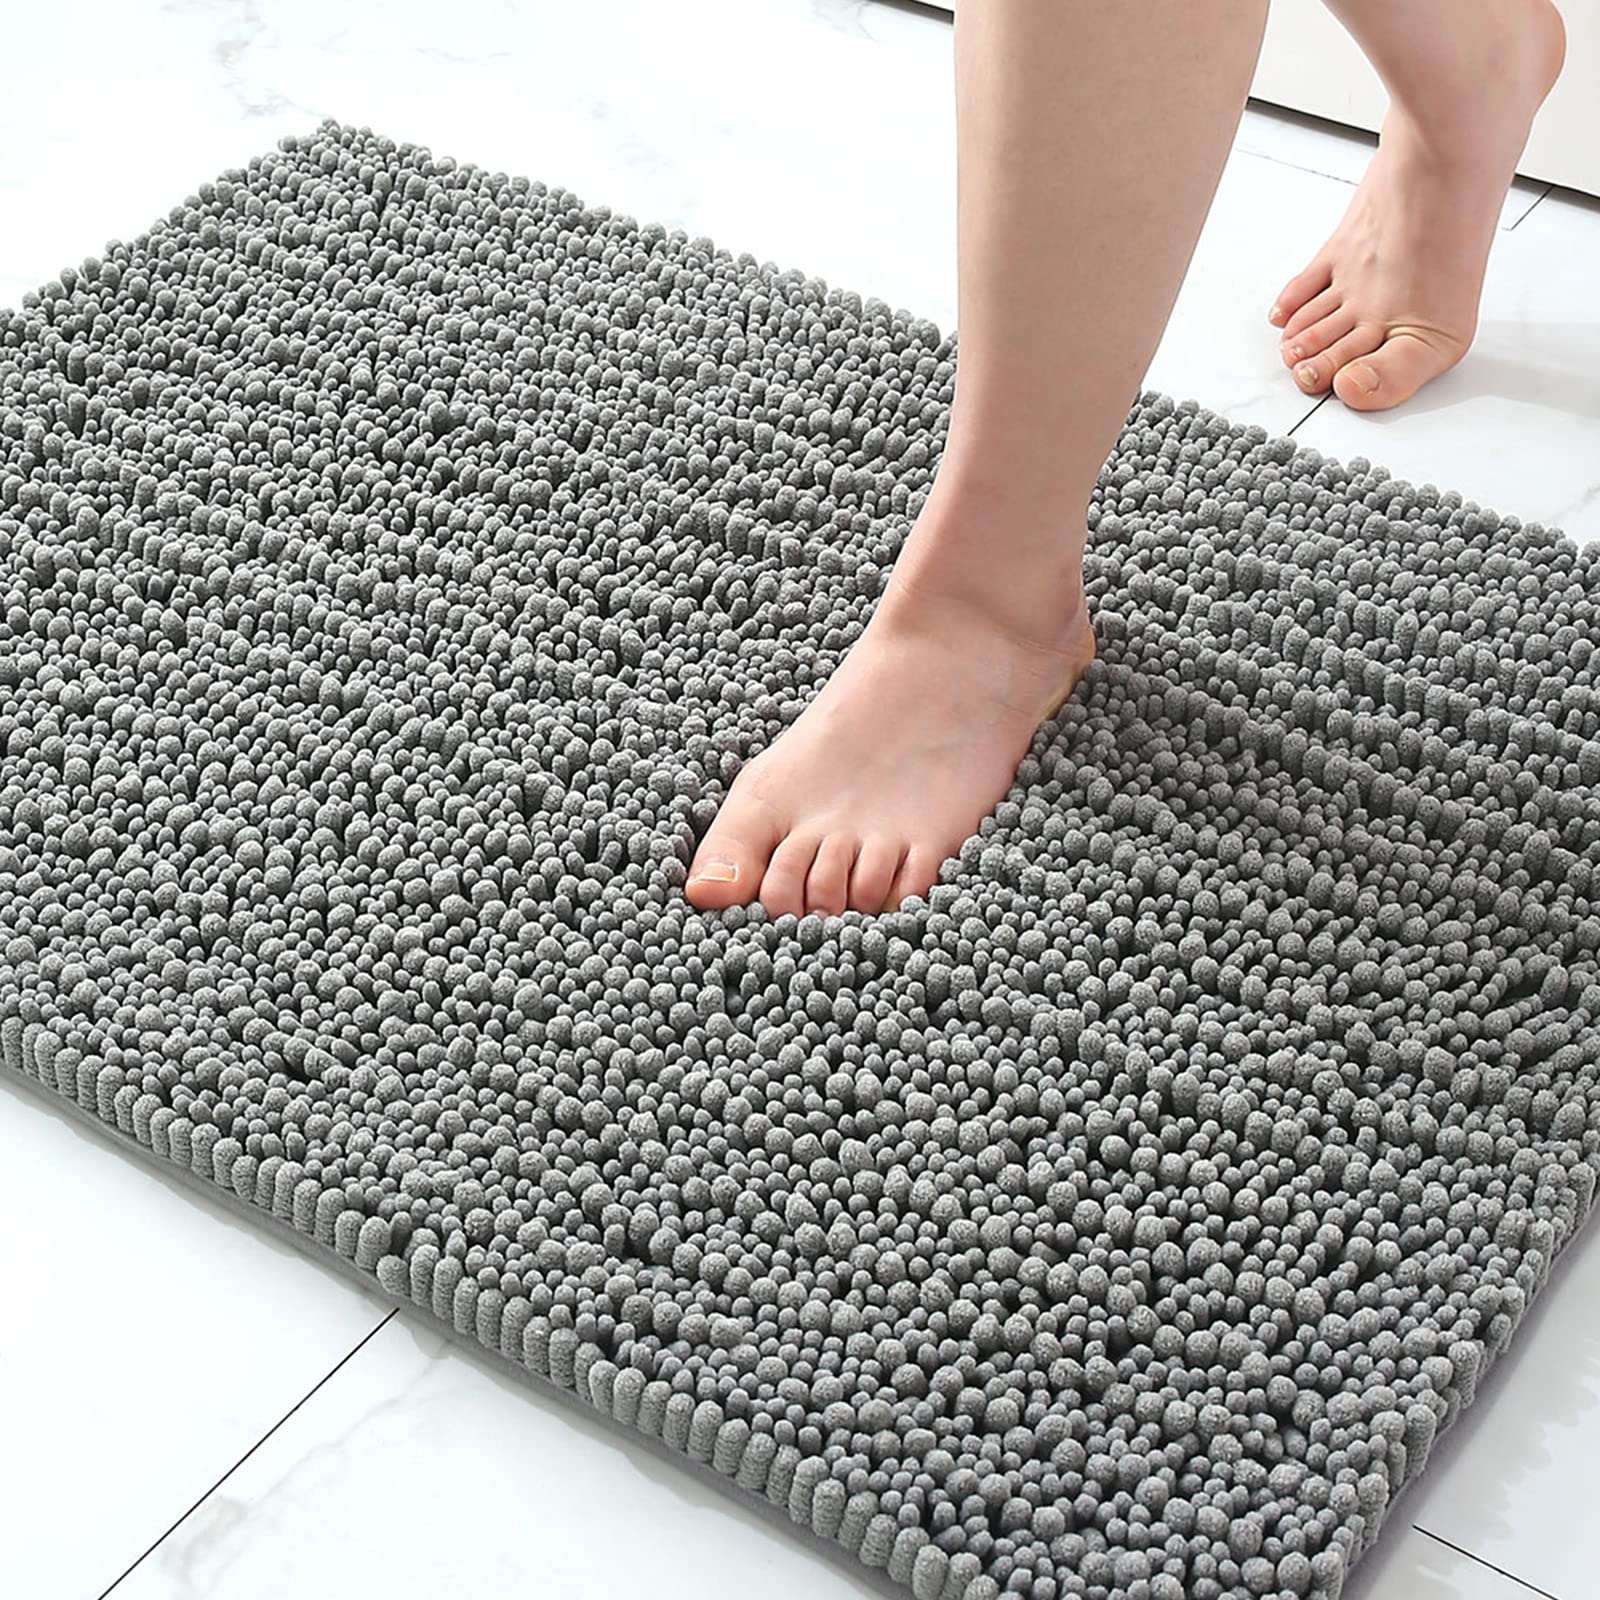 Fournisseurs chinois antidérapant solide chenille absorbant l'eau tapis shaggy tapis chenille tapis de bain image vedette